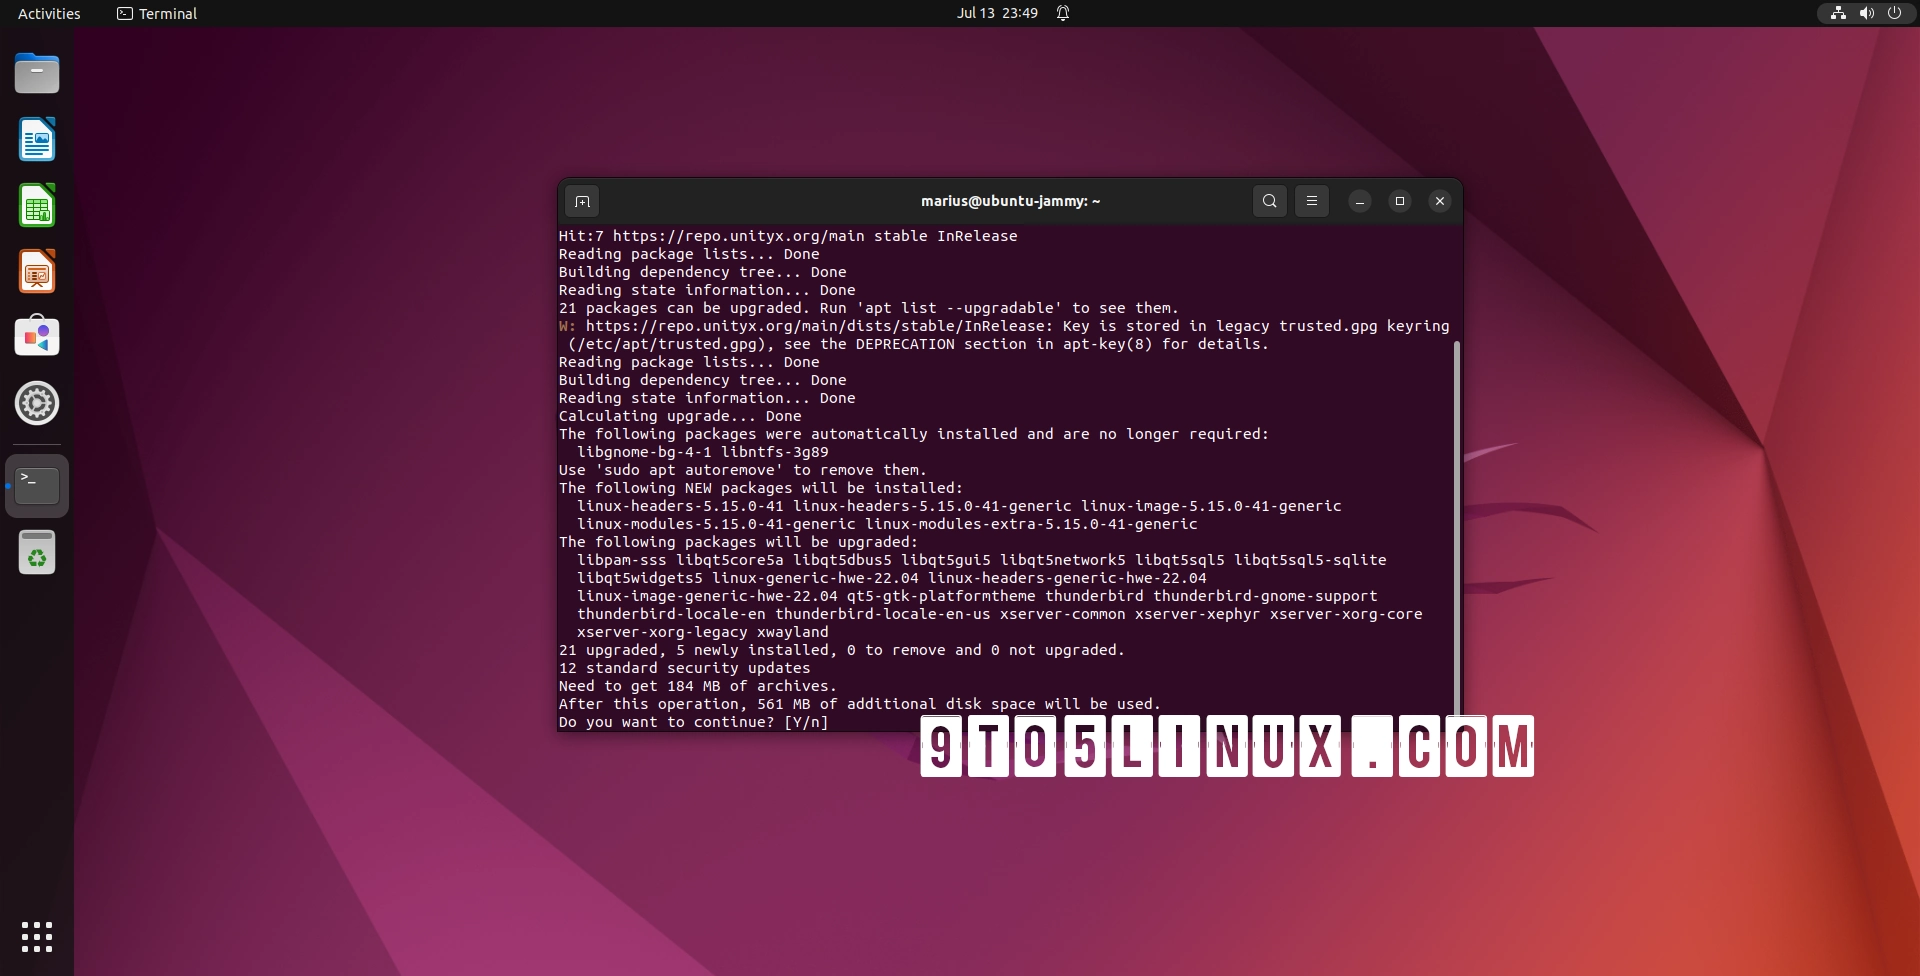 Ubuntu Users Get New Kernel Security Updates, 17 Vulnerabilities Patched